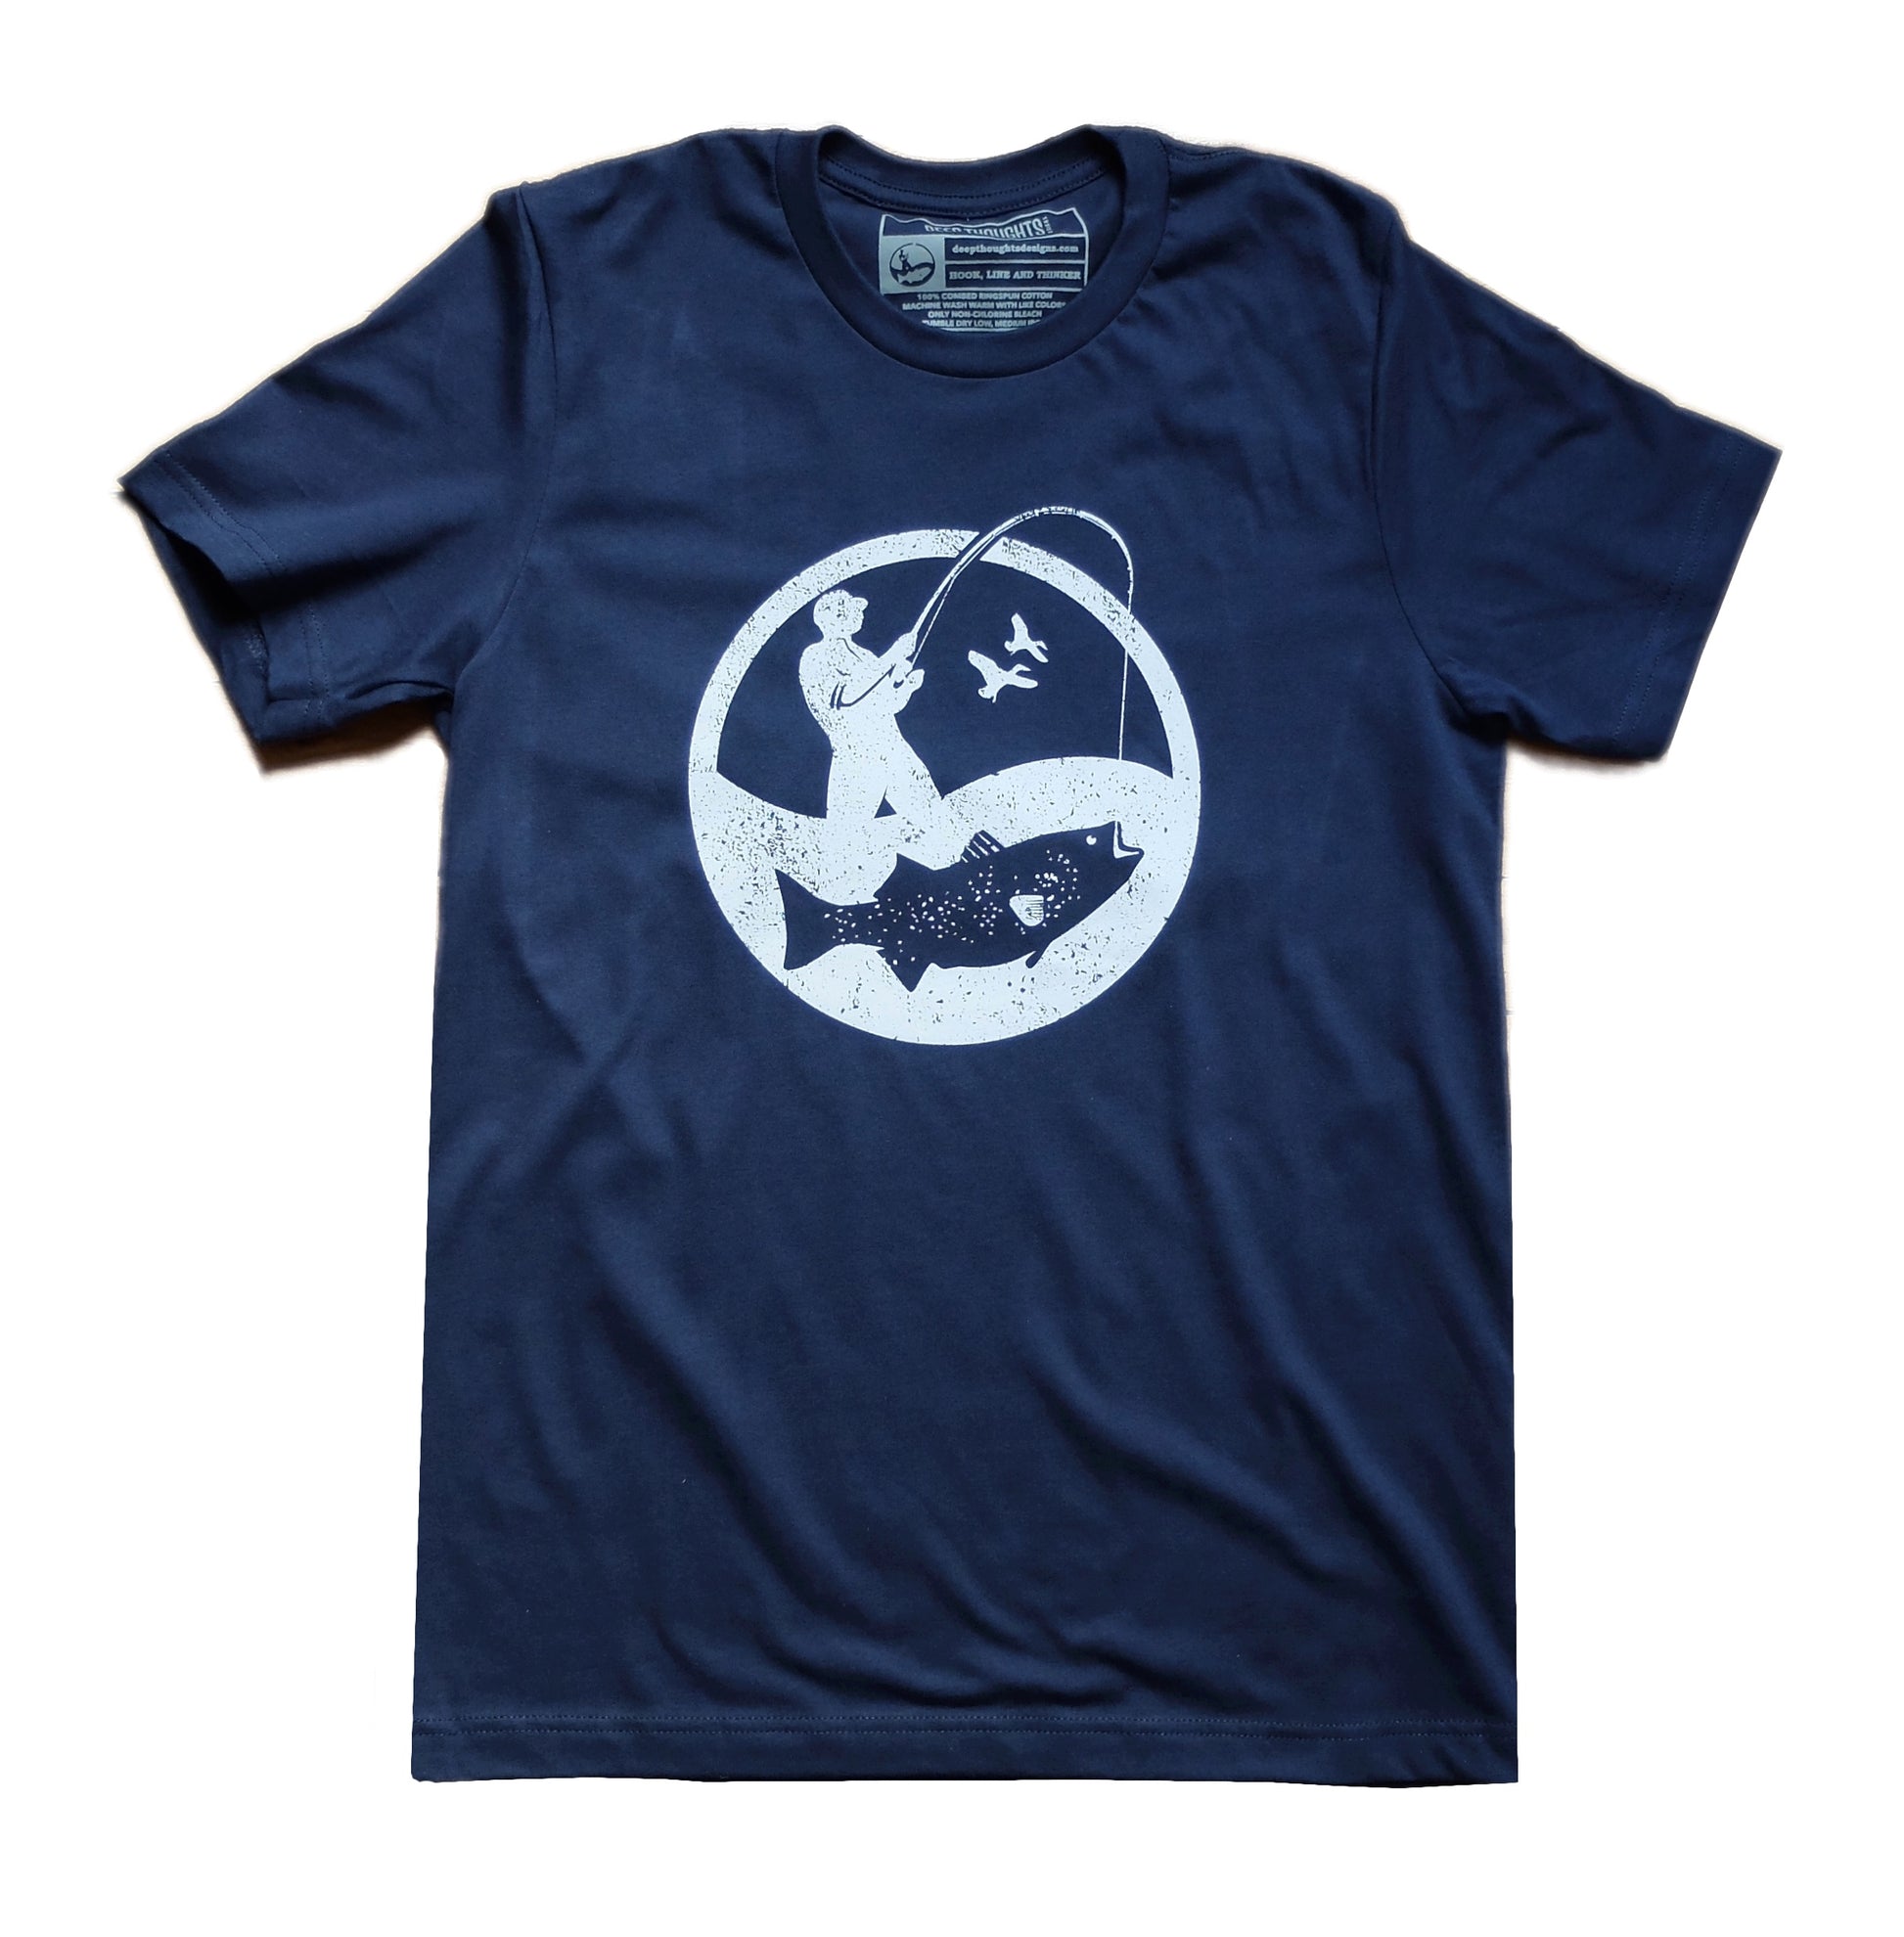 navy blue cotton t-shirt with round white surf fisherman logo